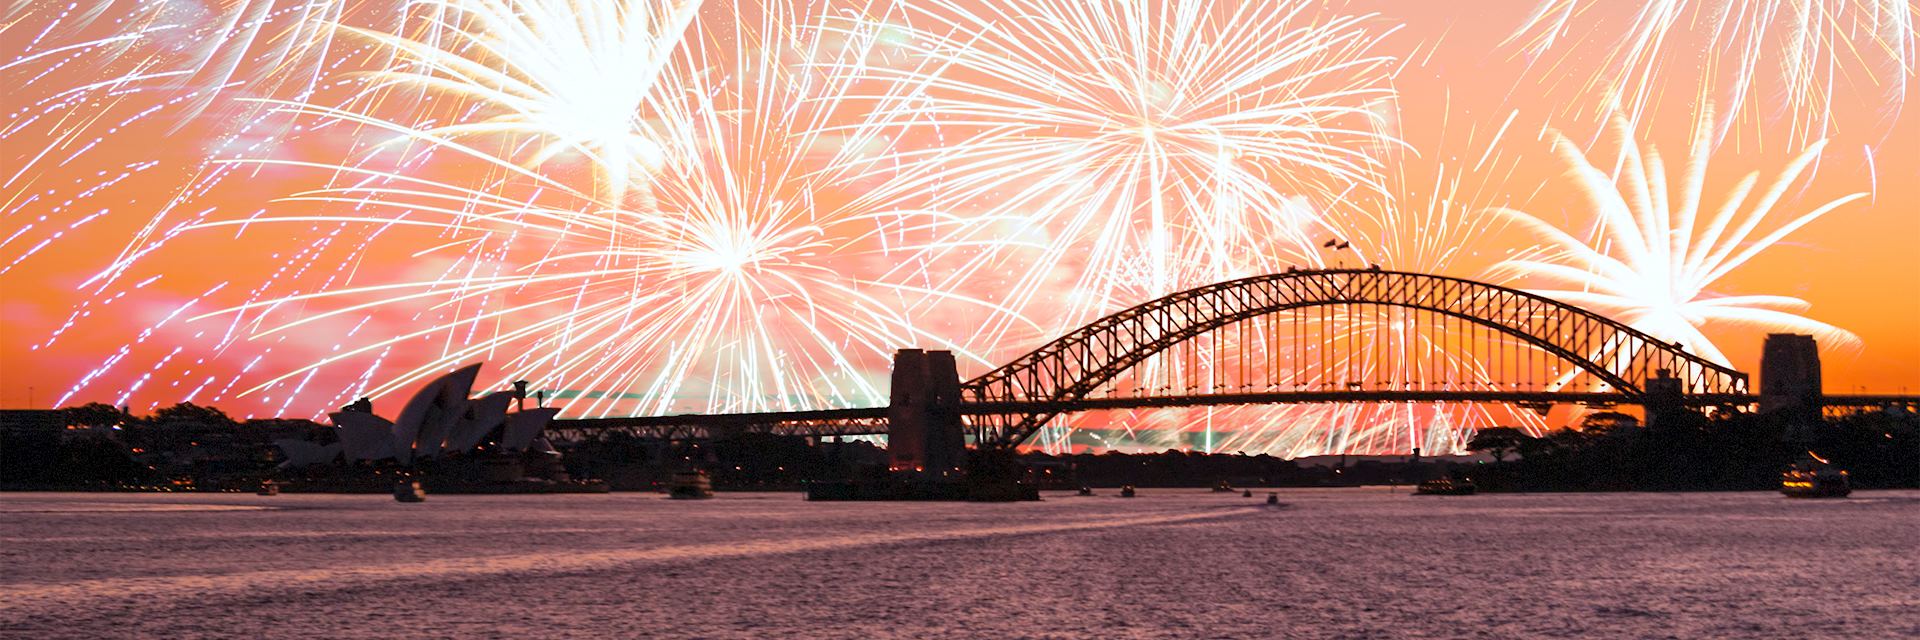 Sydney fireworks, Australia